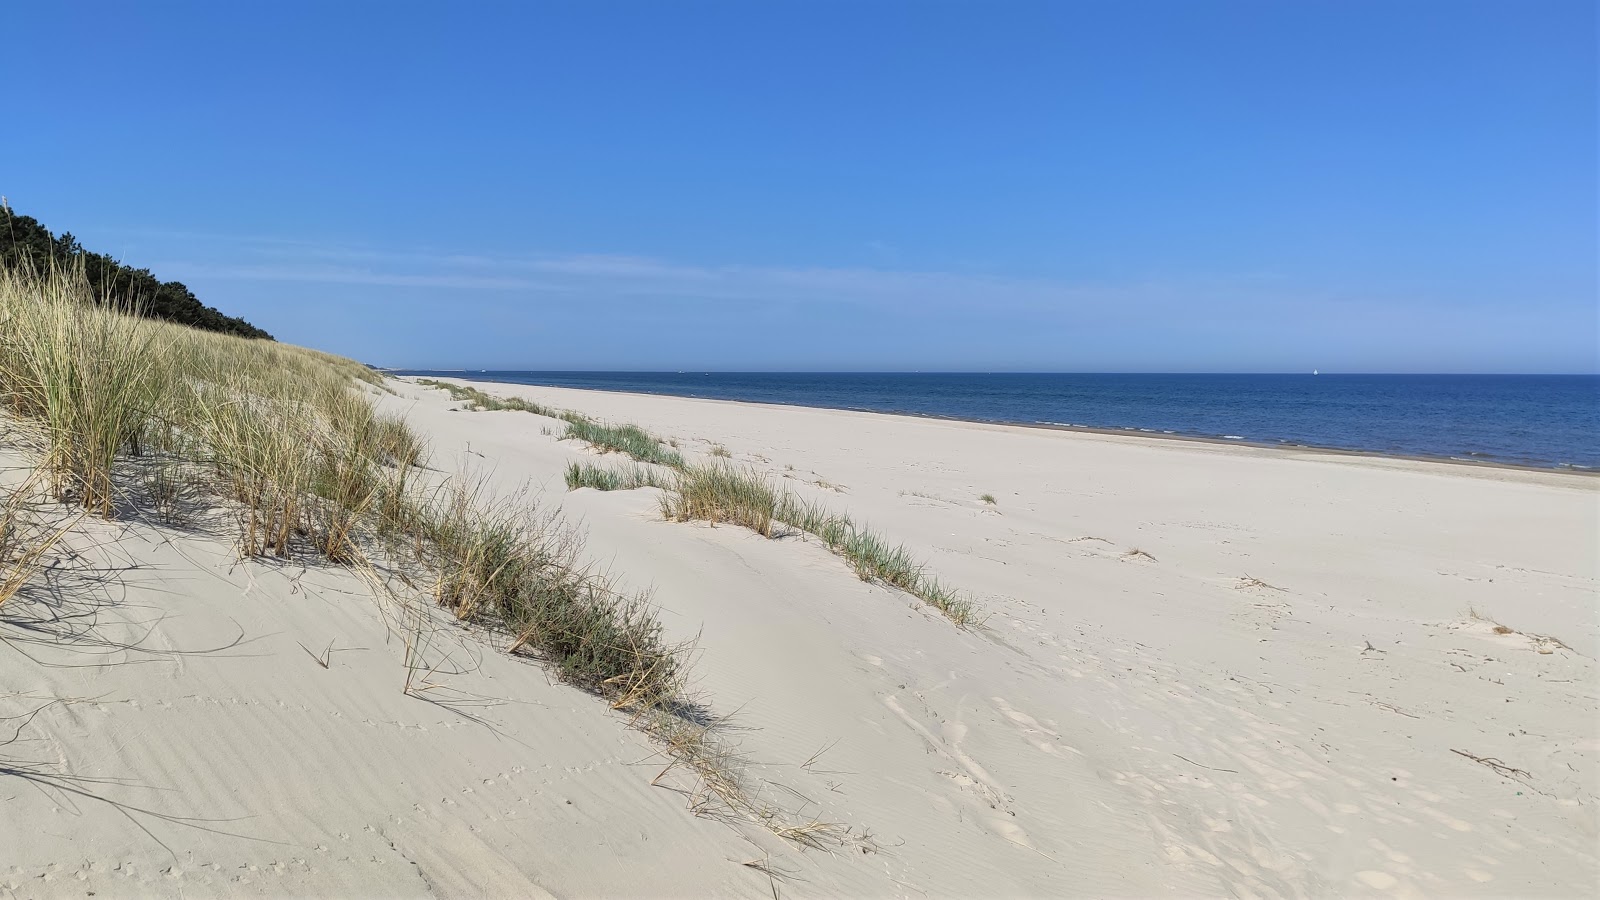 Foto di Mierzeja Sarbska beach con una superficie del sabbia luminosa